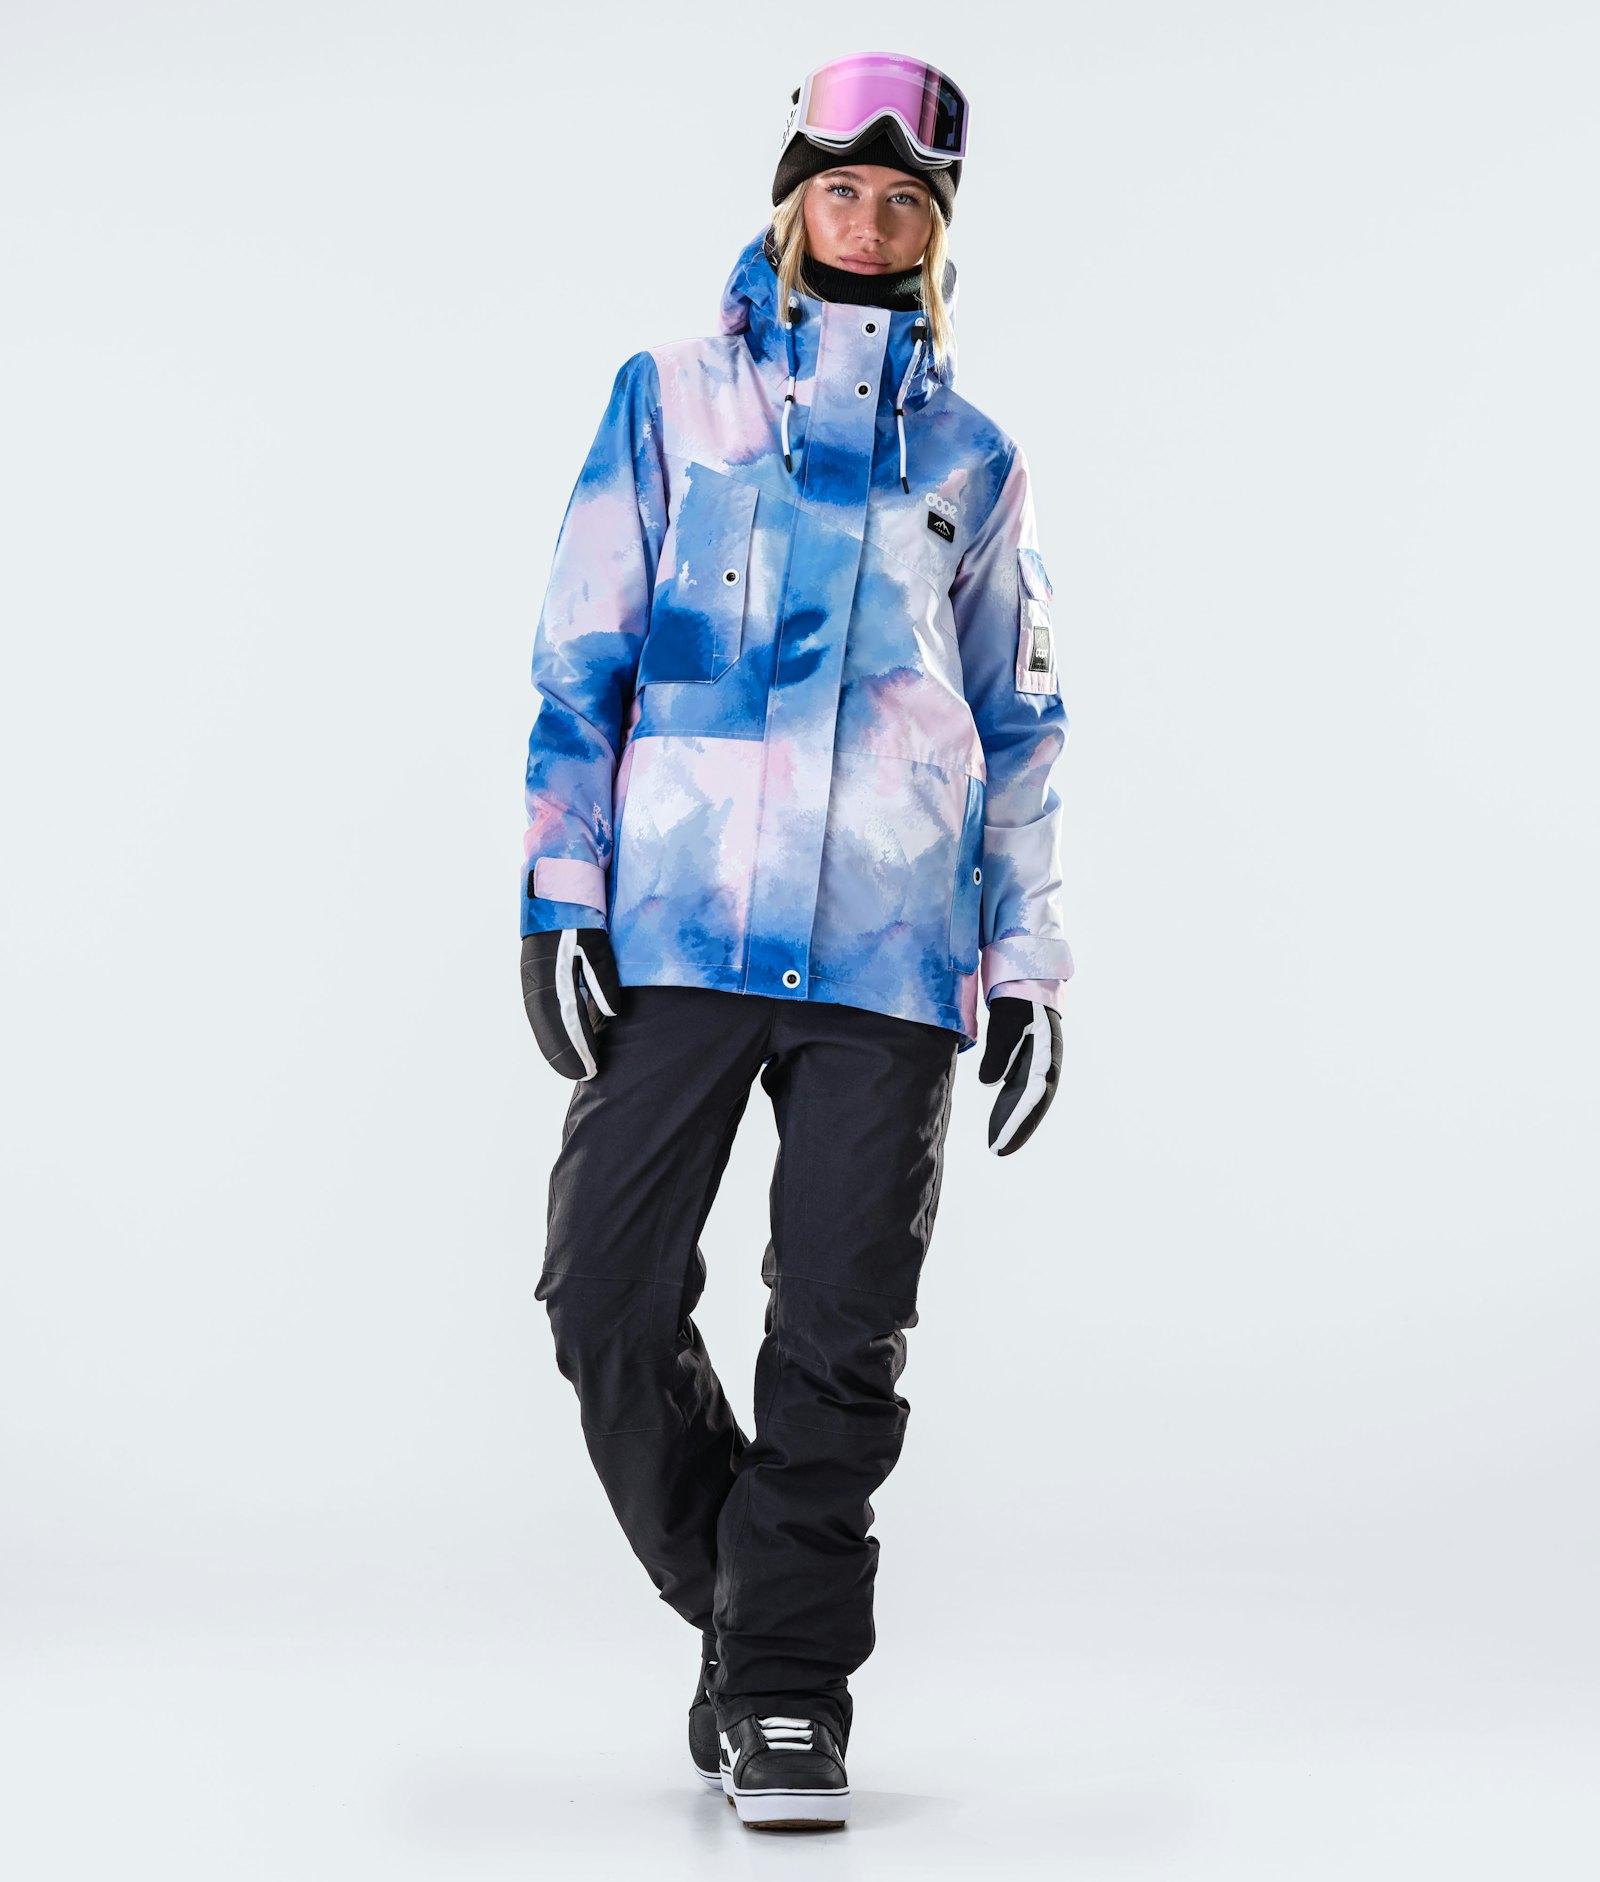 Adept W 2020 Veste Snowboard Femme Cloud